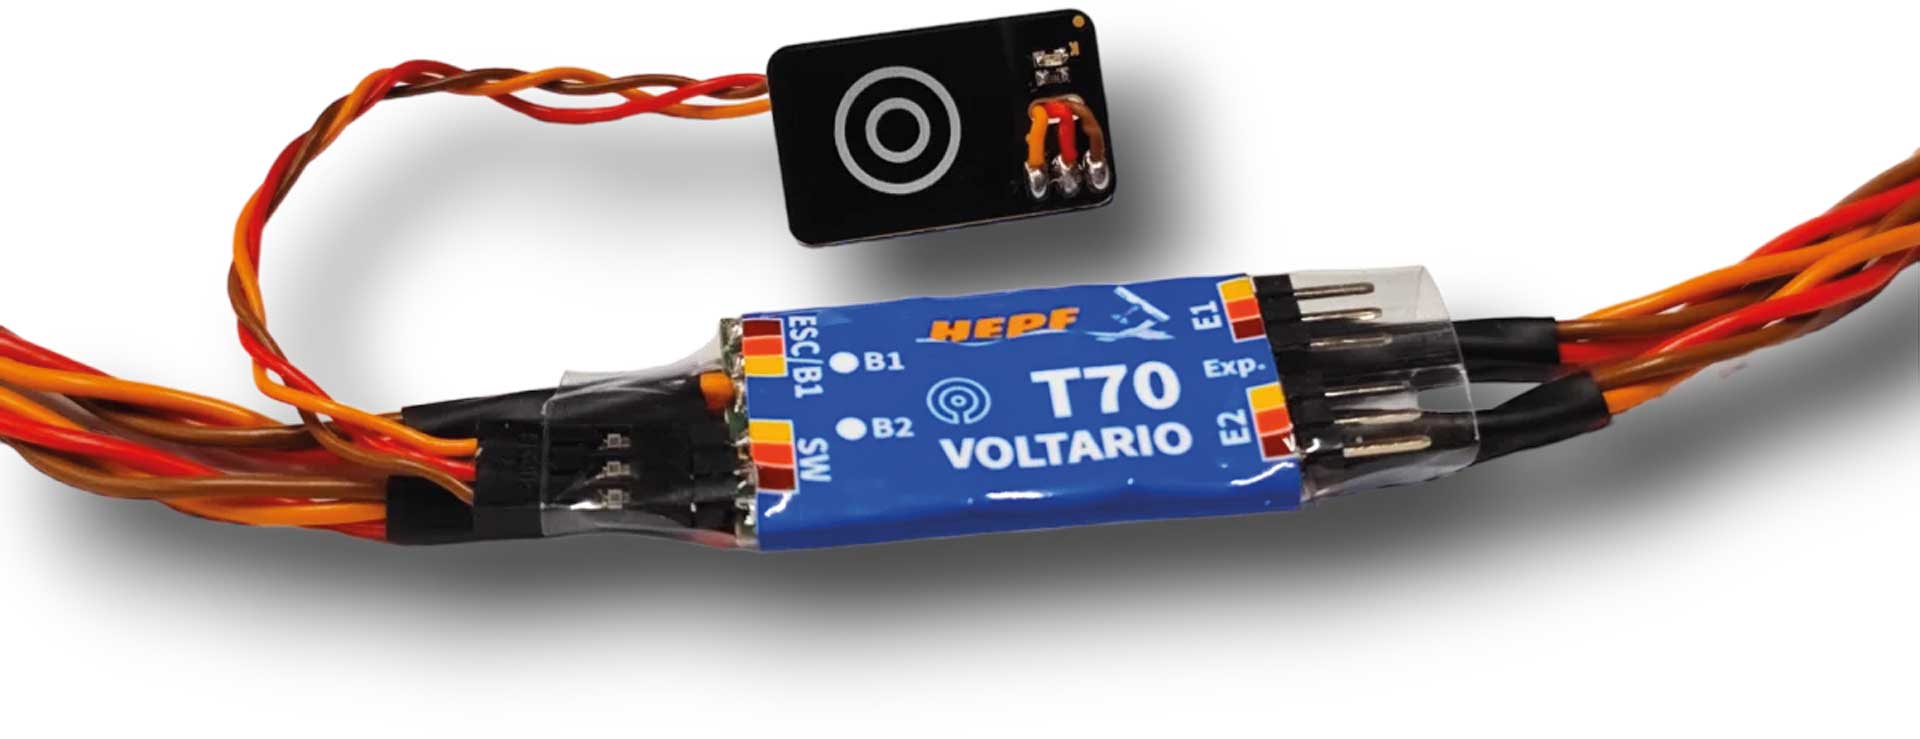 HEPF Voltario T70 avec système de connexion JR